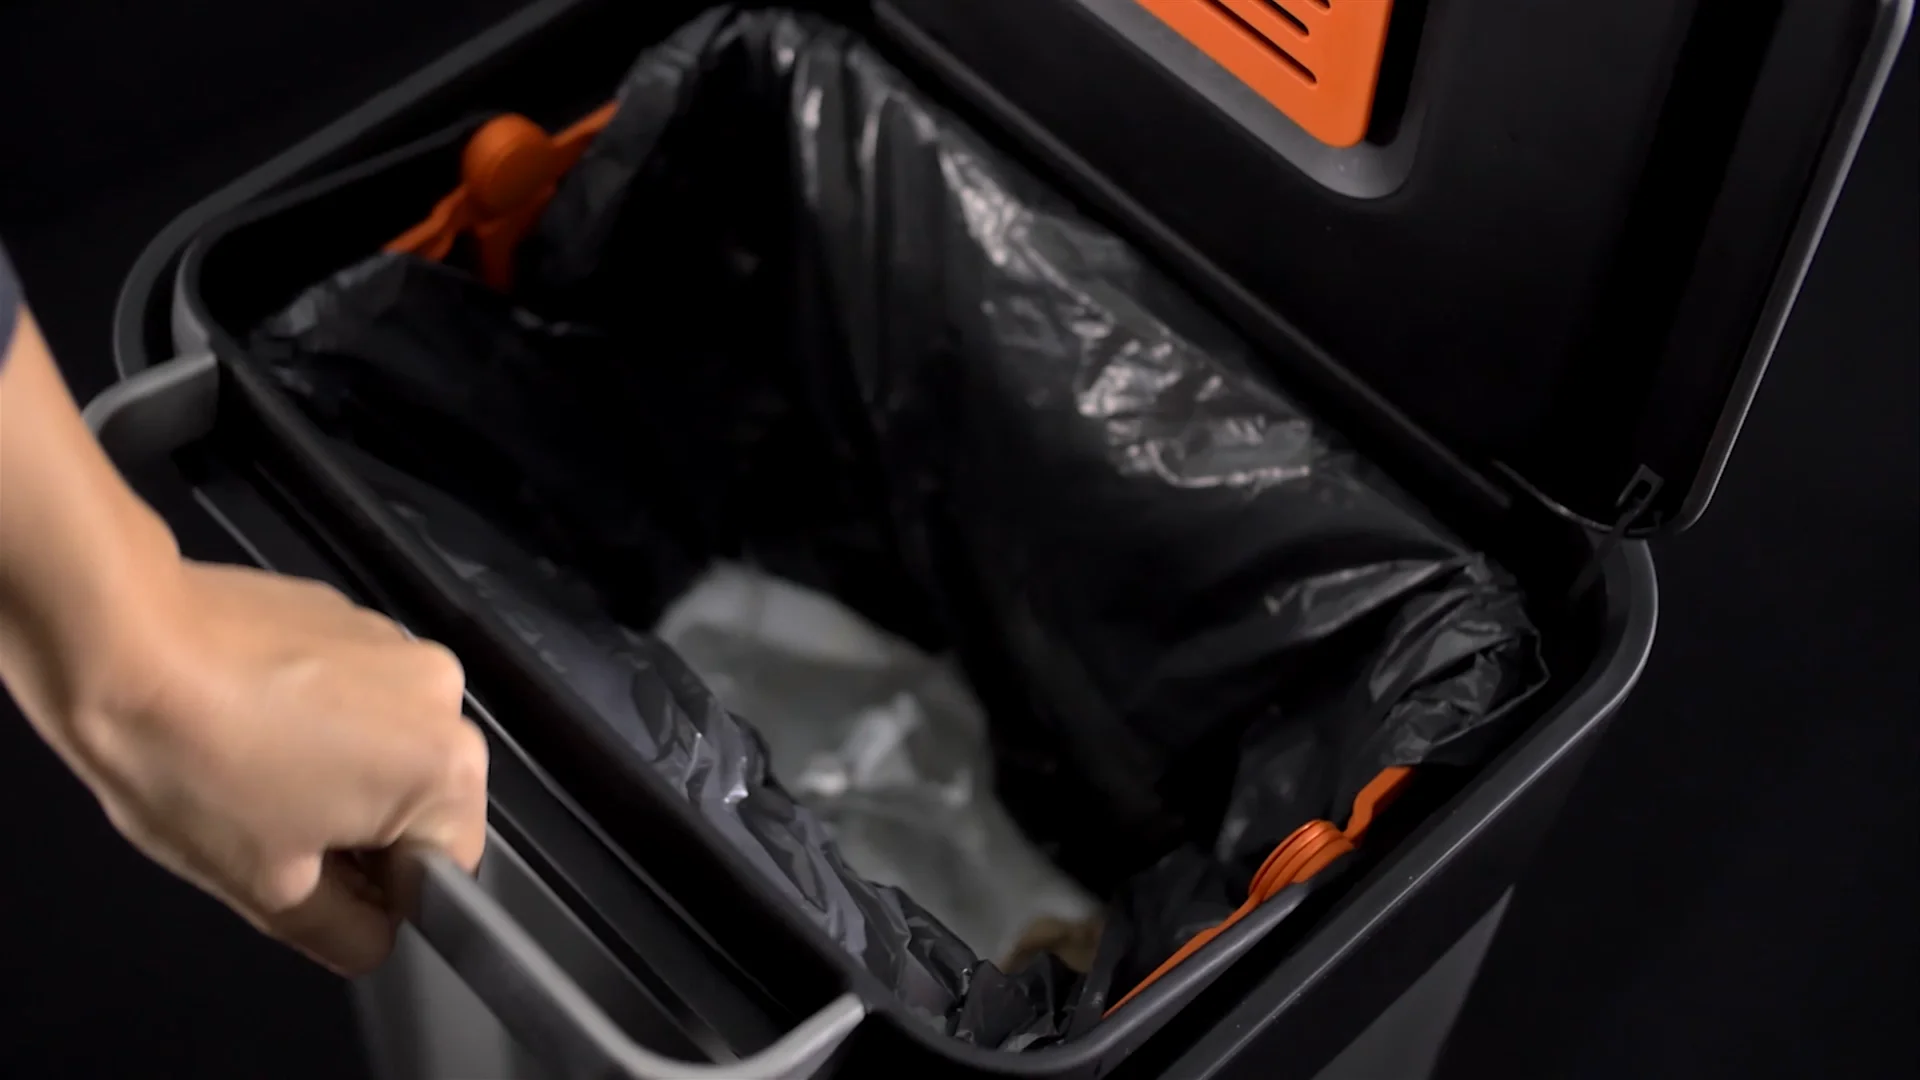 Joseph Joseph Titan Trash Compactor - How to compact your waste on Vimeo